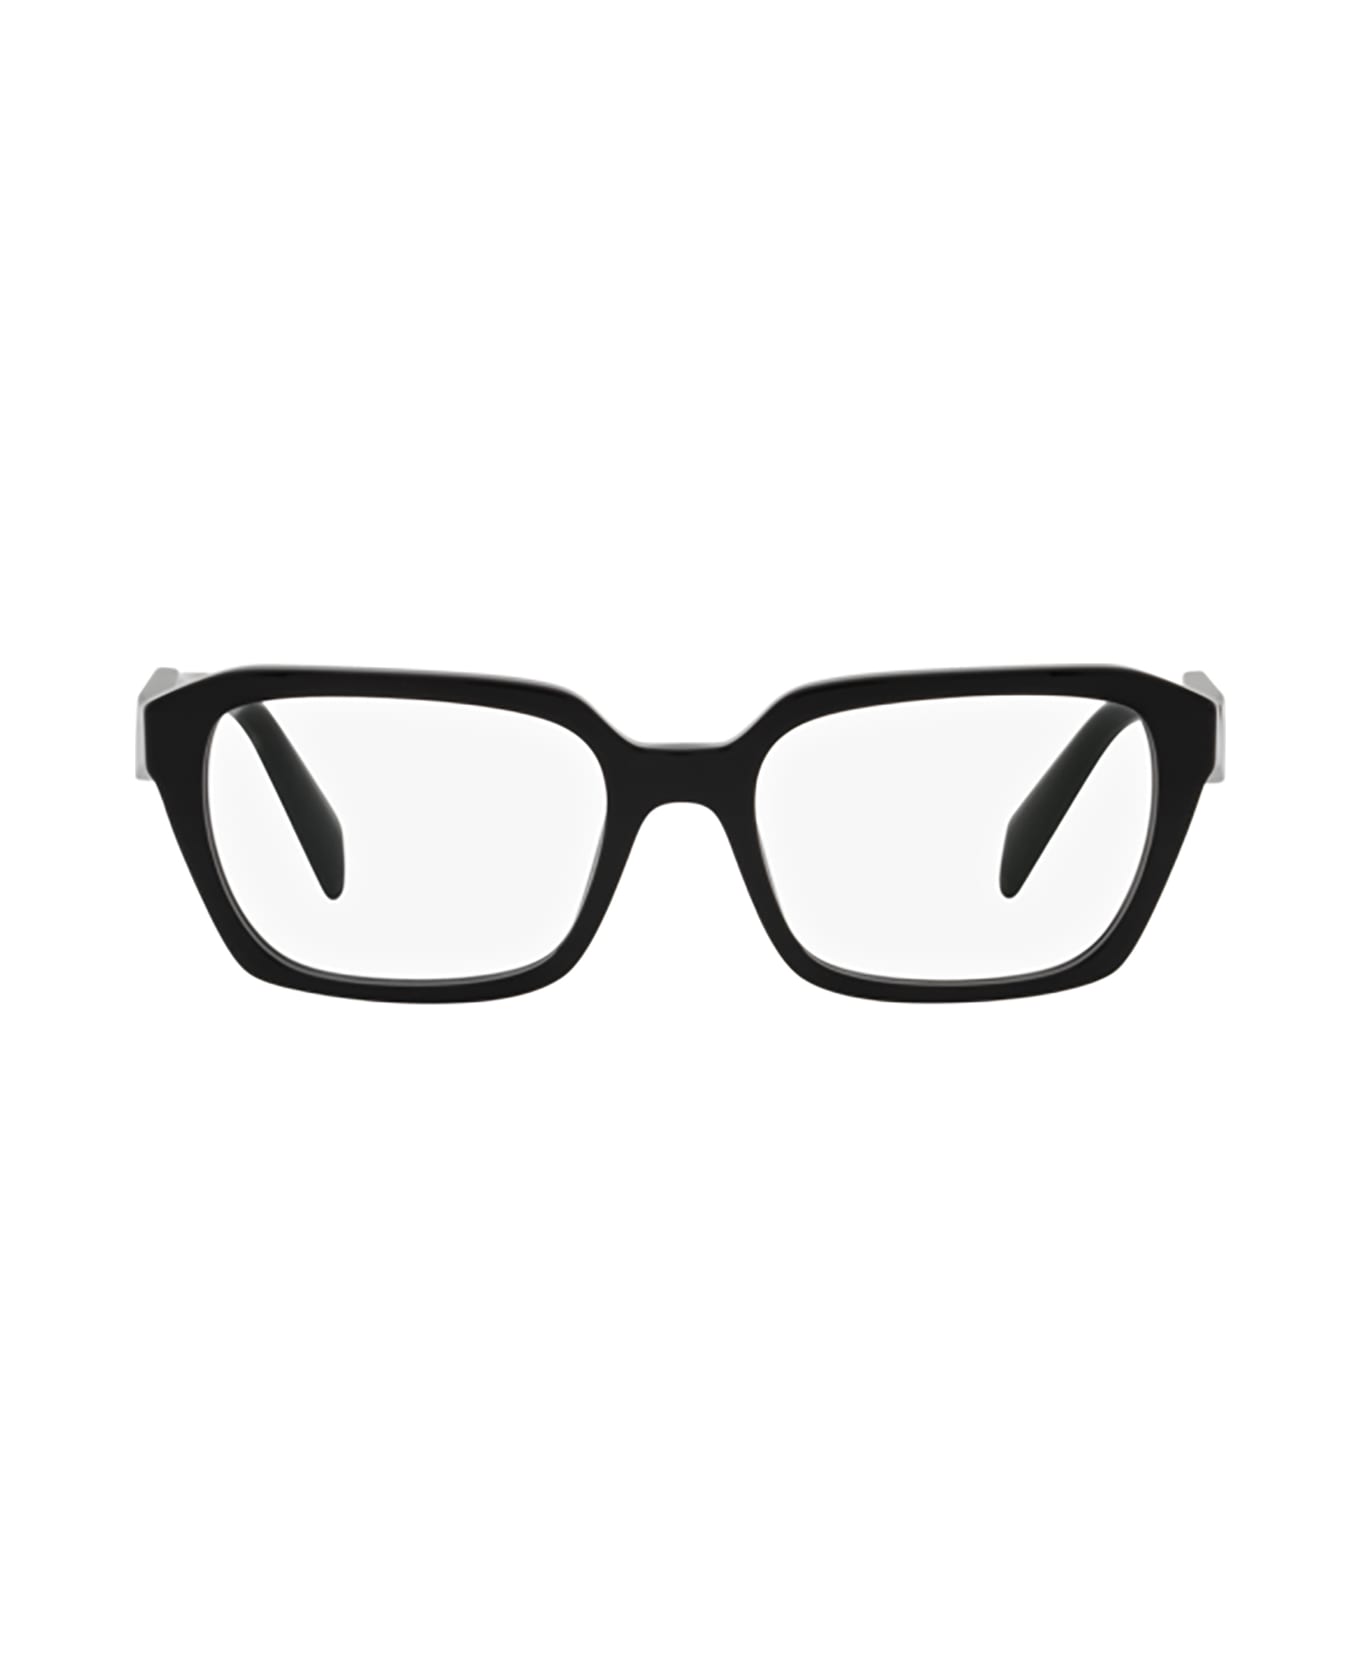 Prada Eyewear Pr 14zv Black Glasses - Black